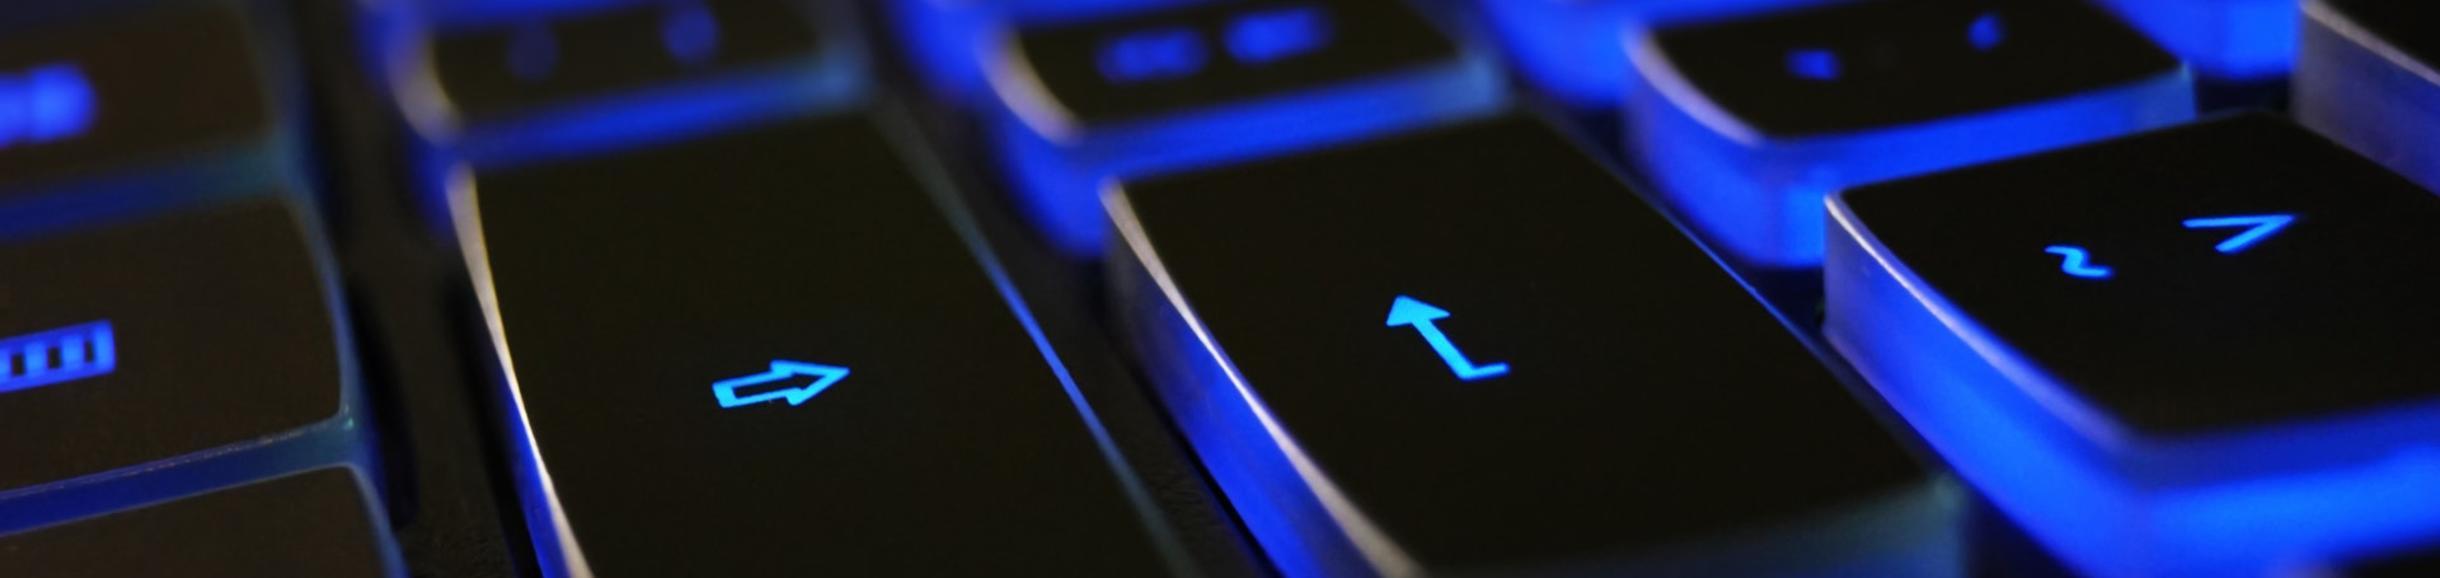 Computer keyboard dark blue, free stock image